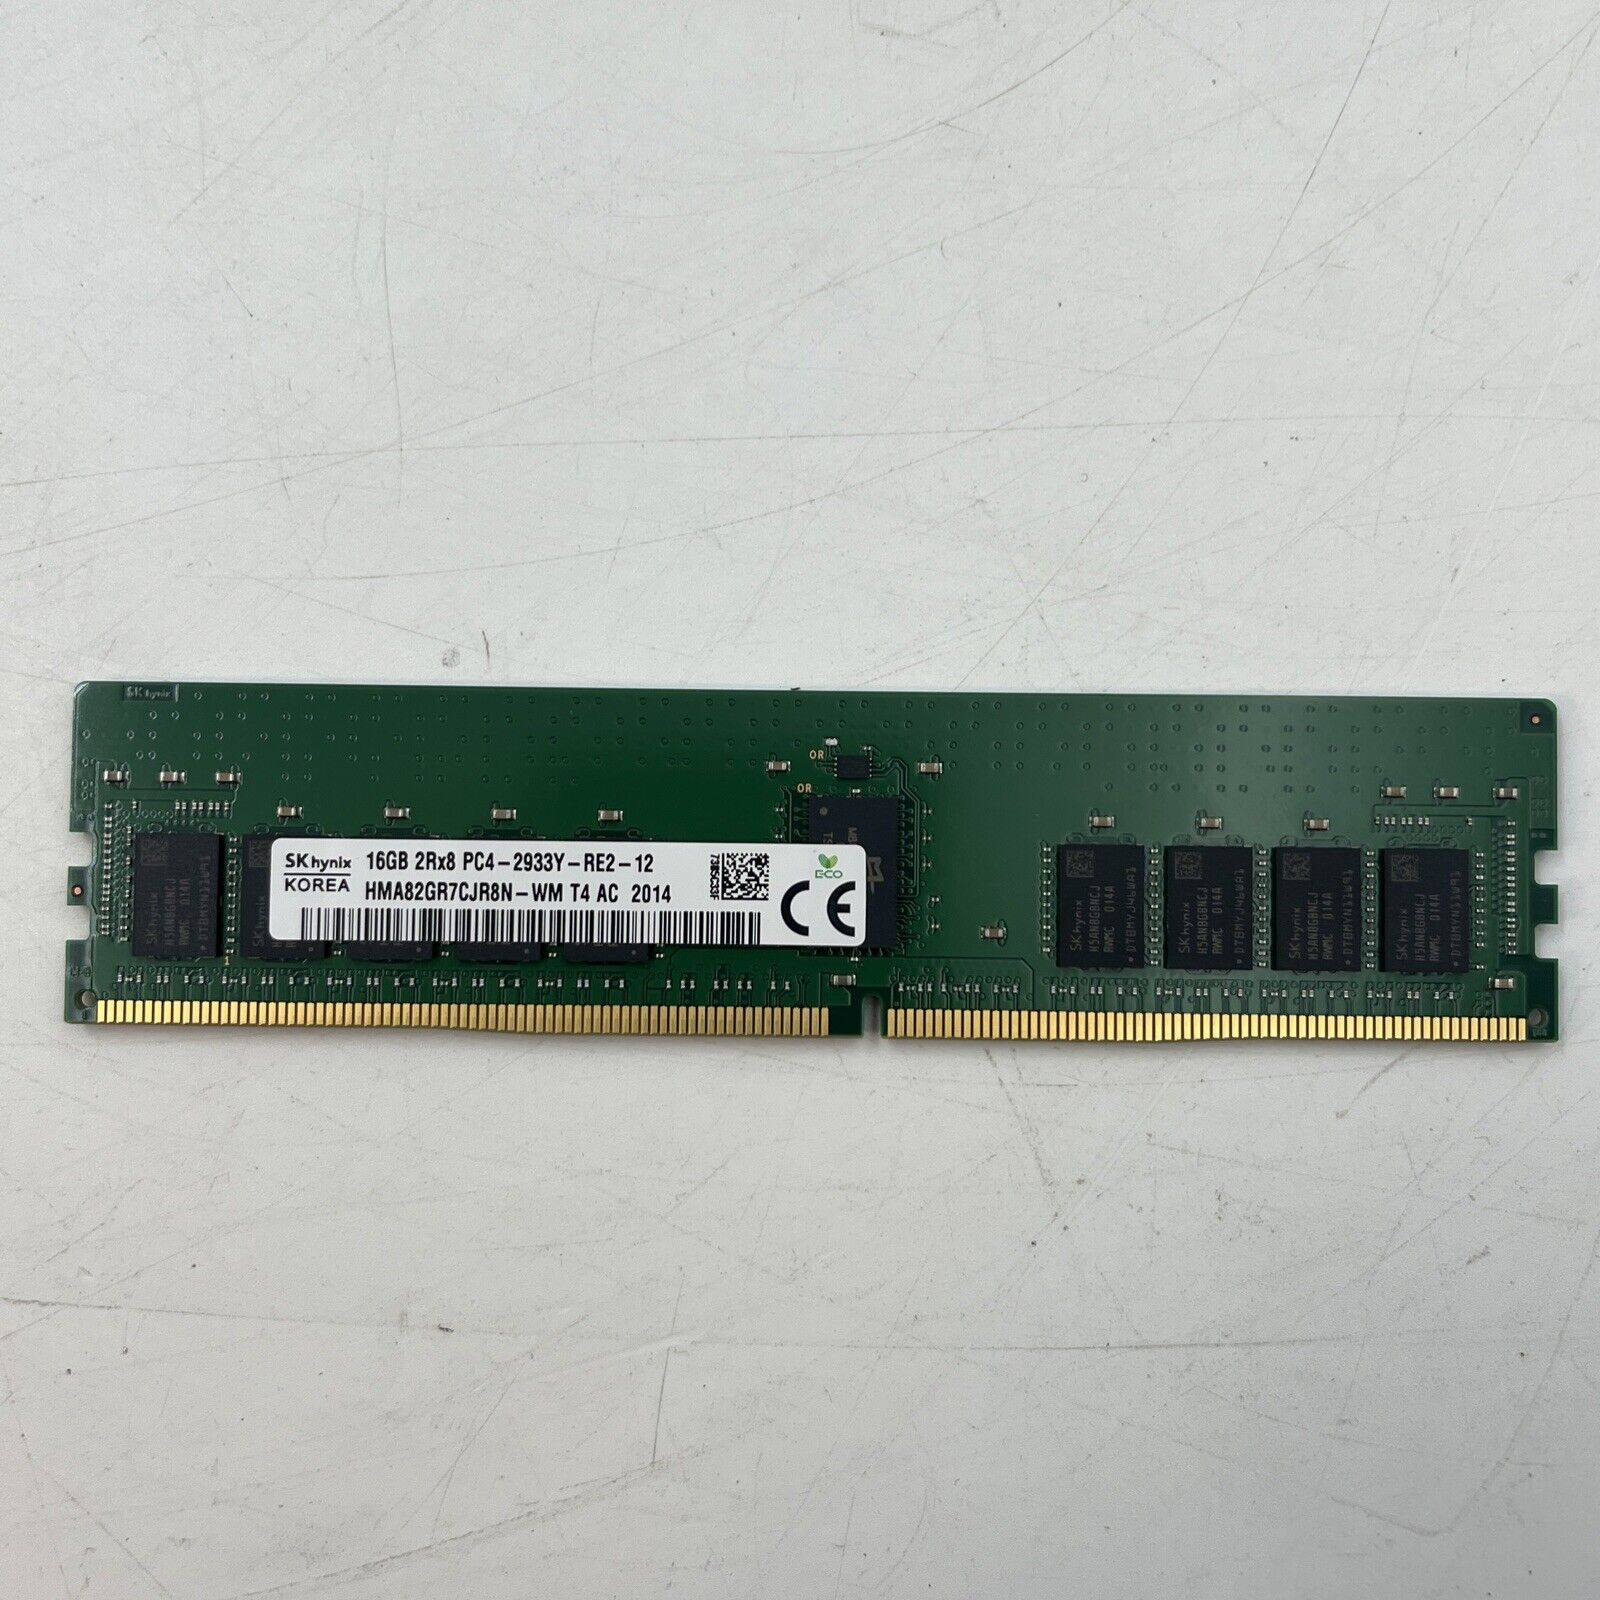 LOT OF 8 SK Hynix 16GB 2Rx8 PC4-2933Y Server Memory #2